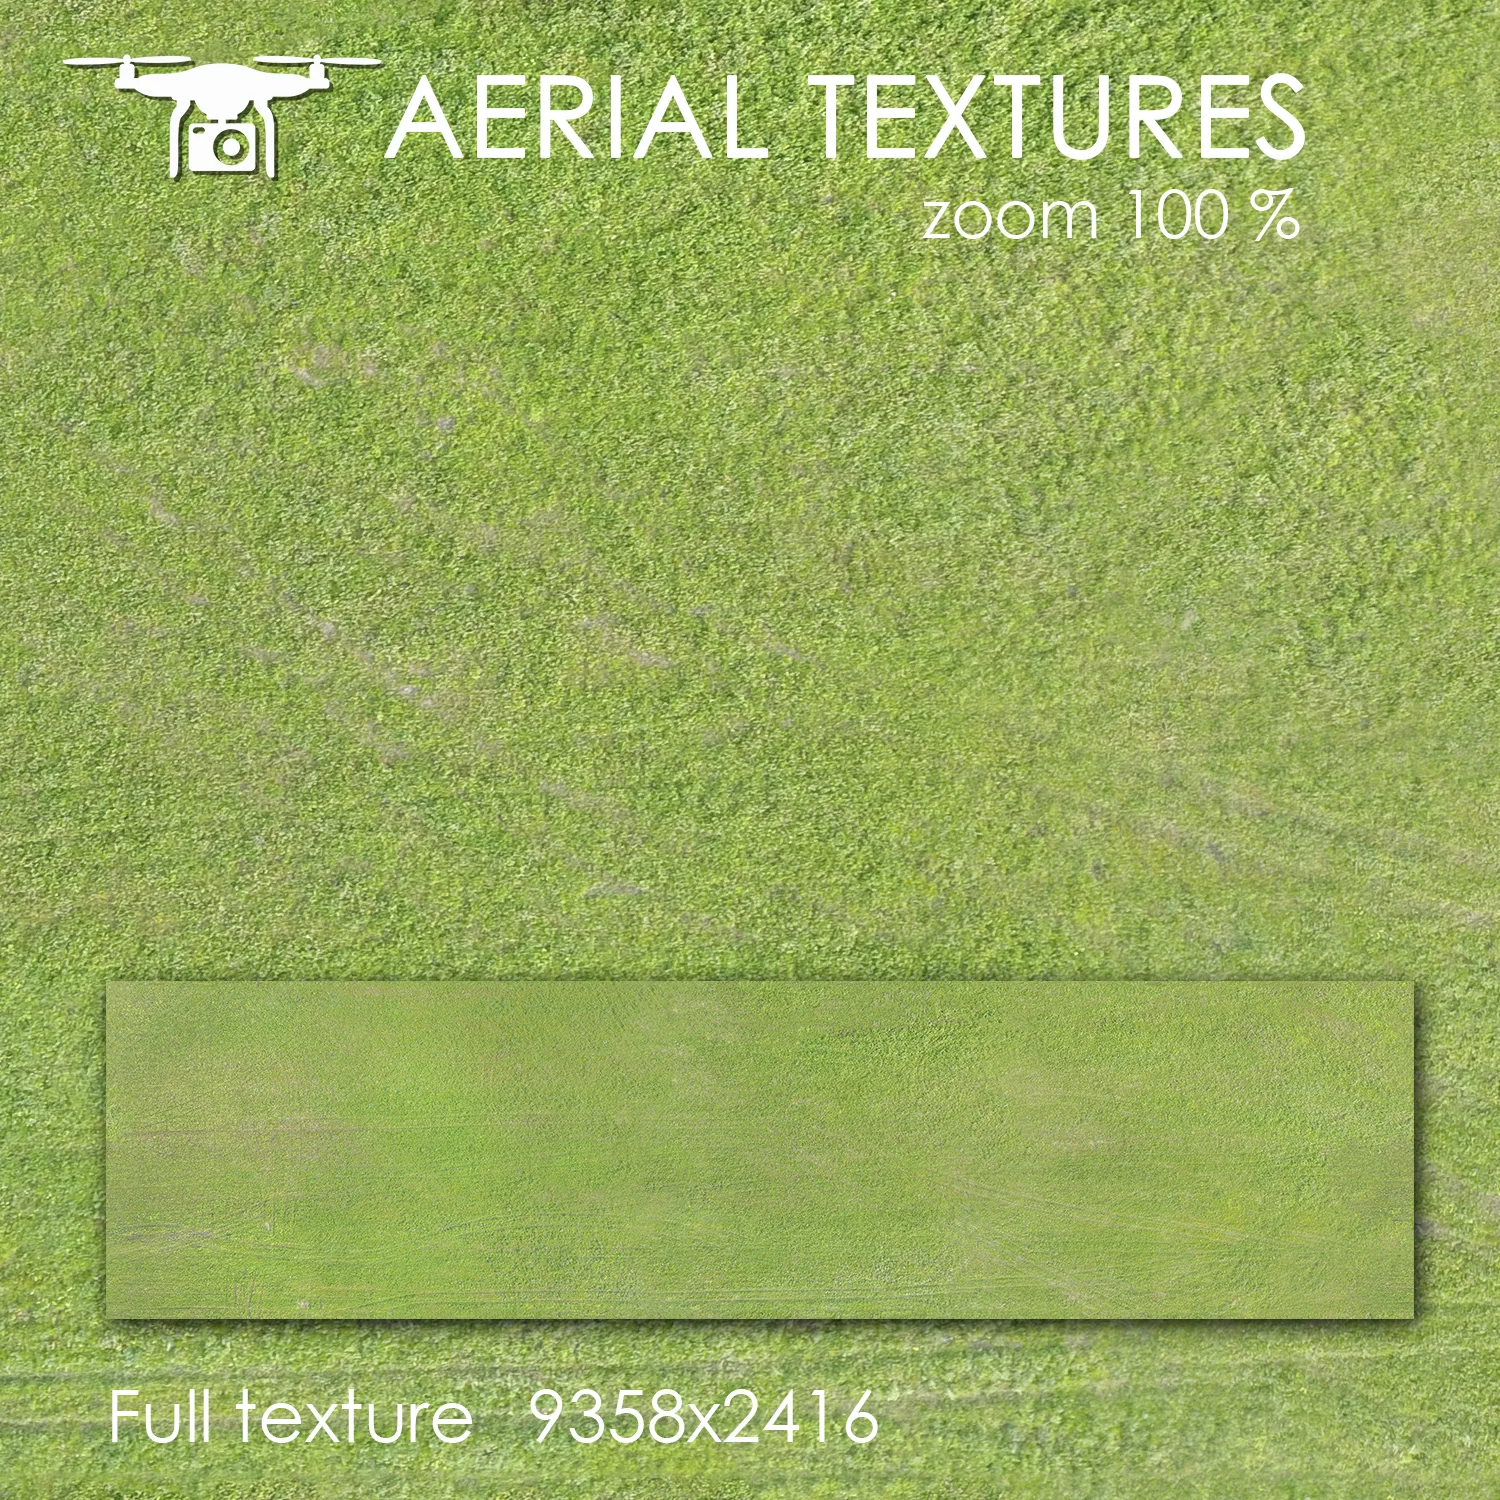 Aerial Texture 77